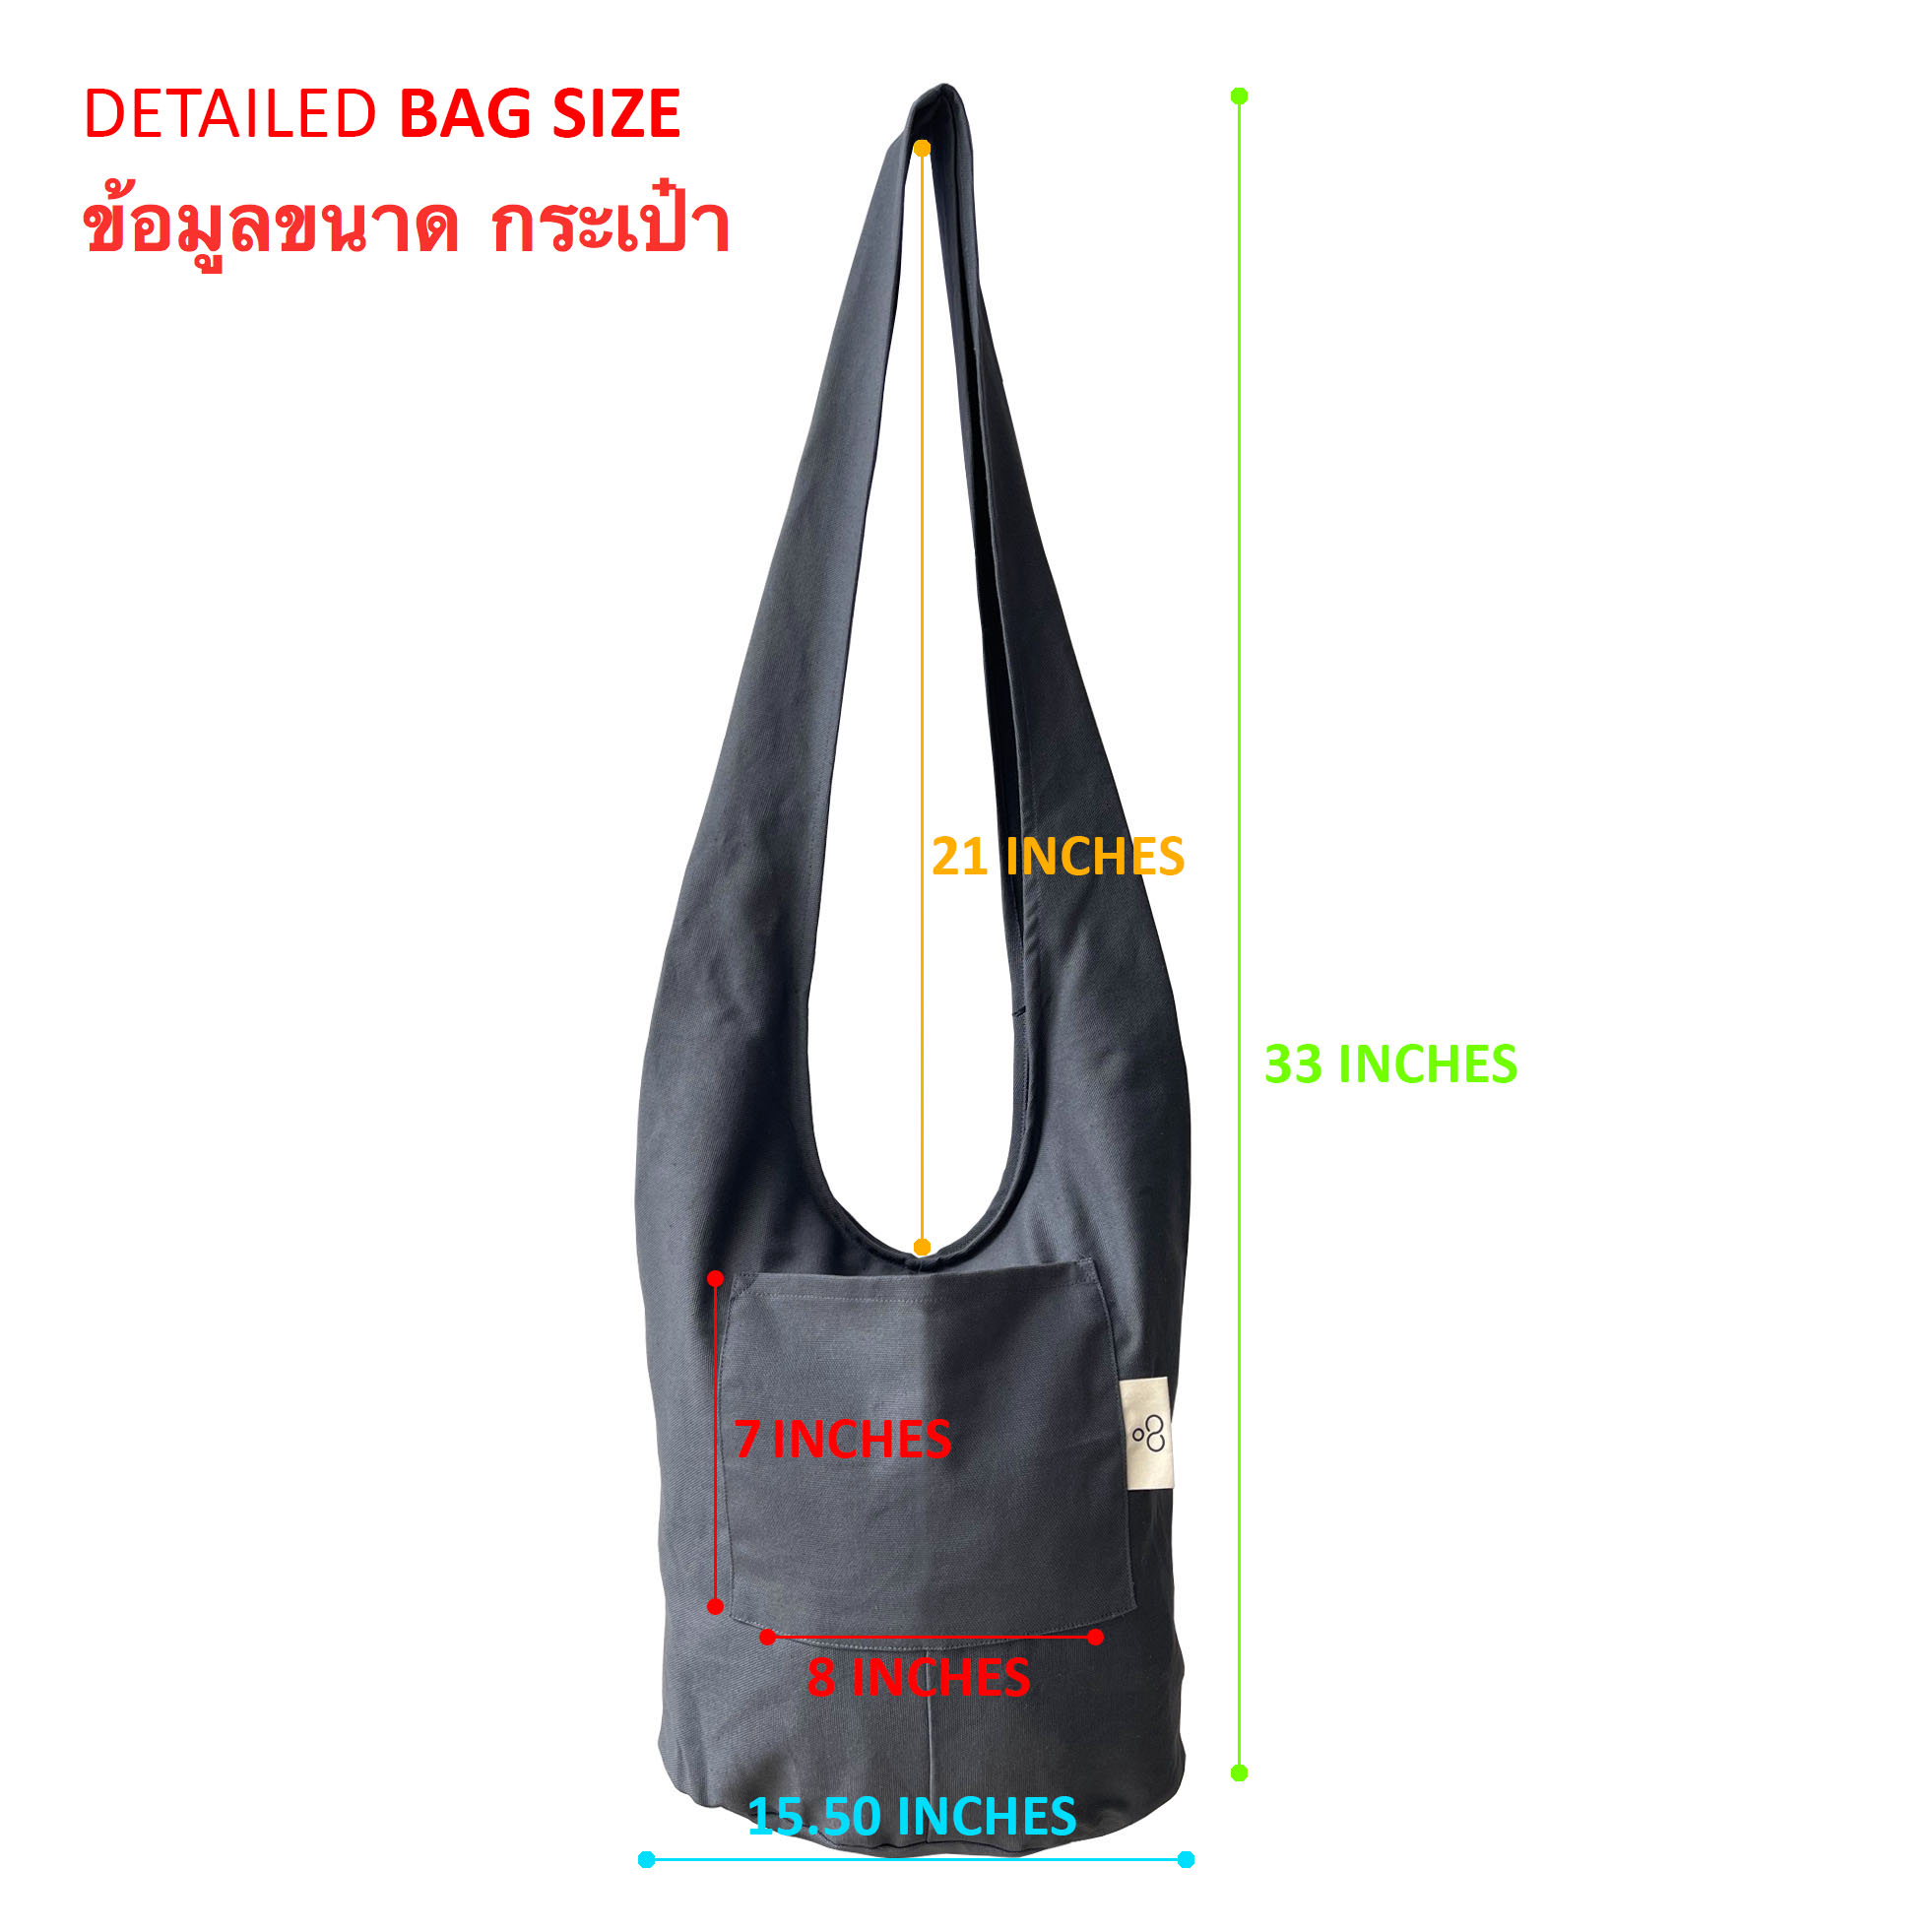 Bag size